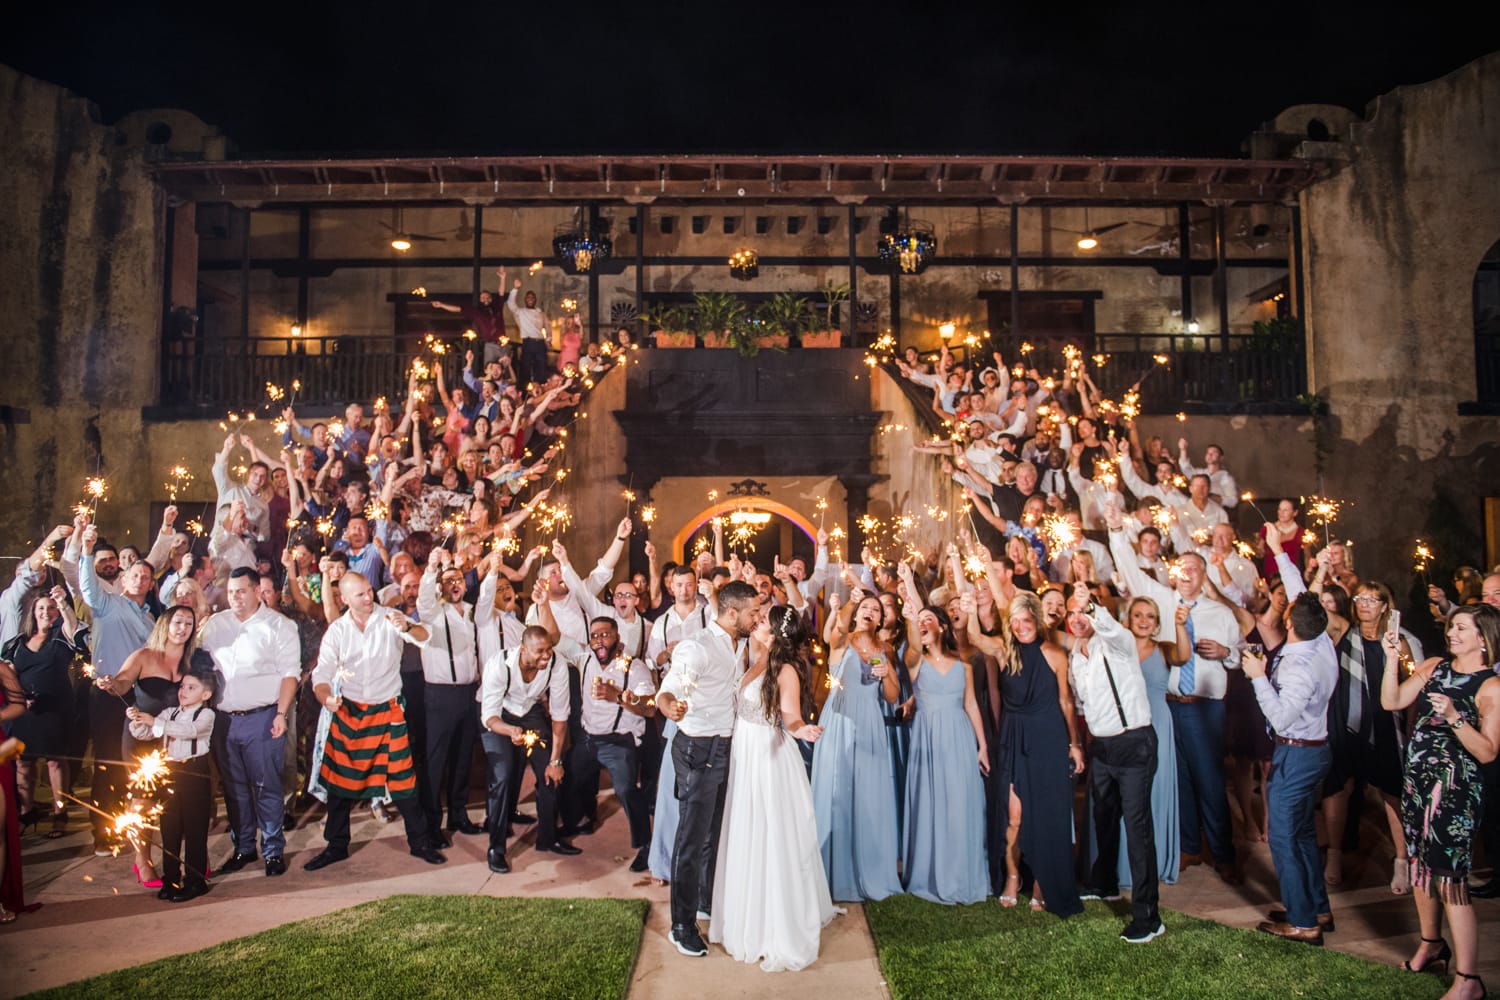 Puerto Rico photographer Camille Fontanez shares a beautiful destination wedding at Hacienda Campo Rico